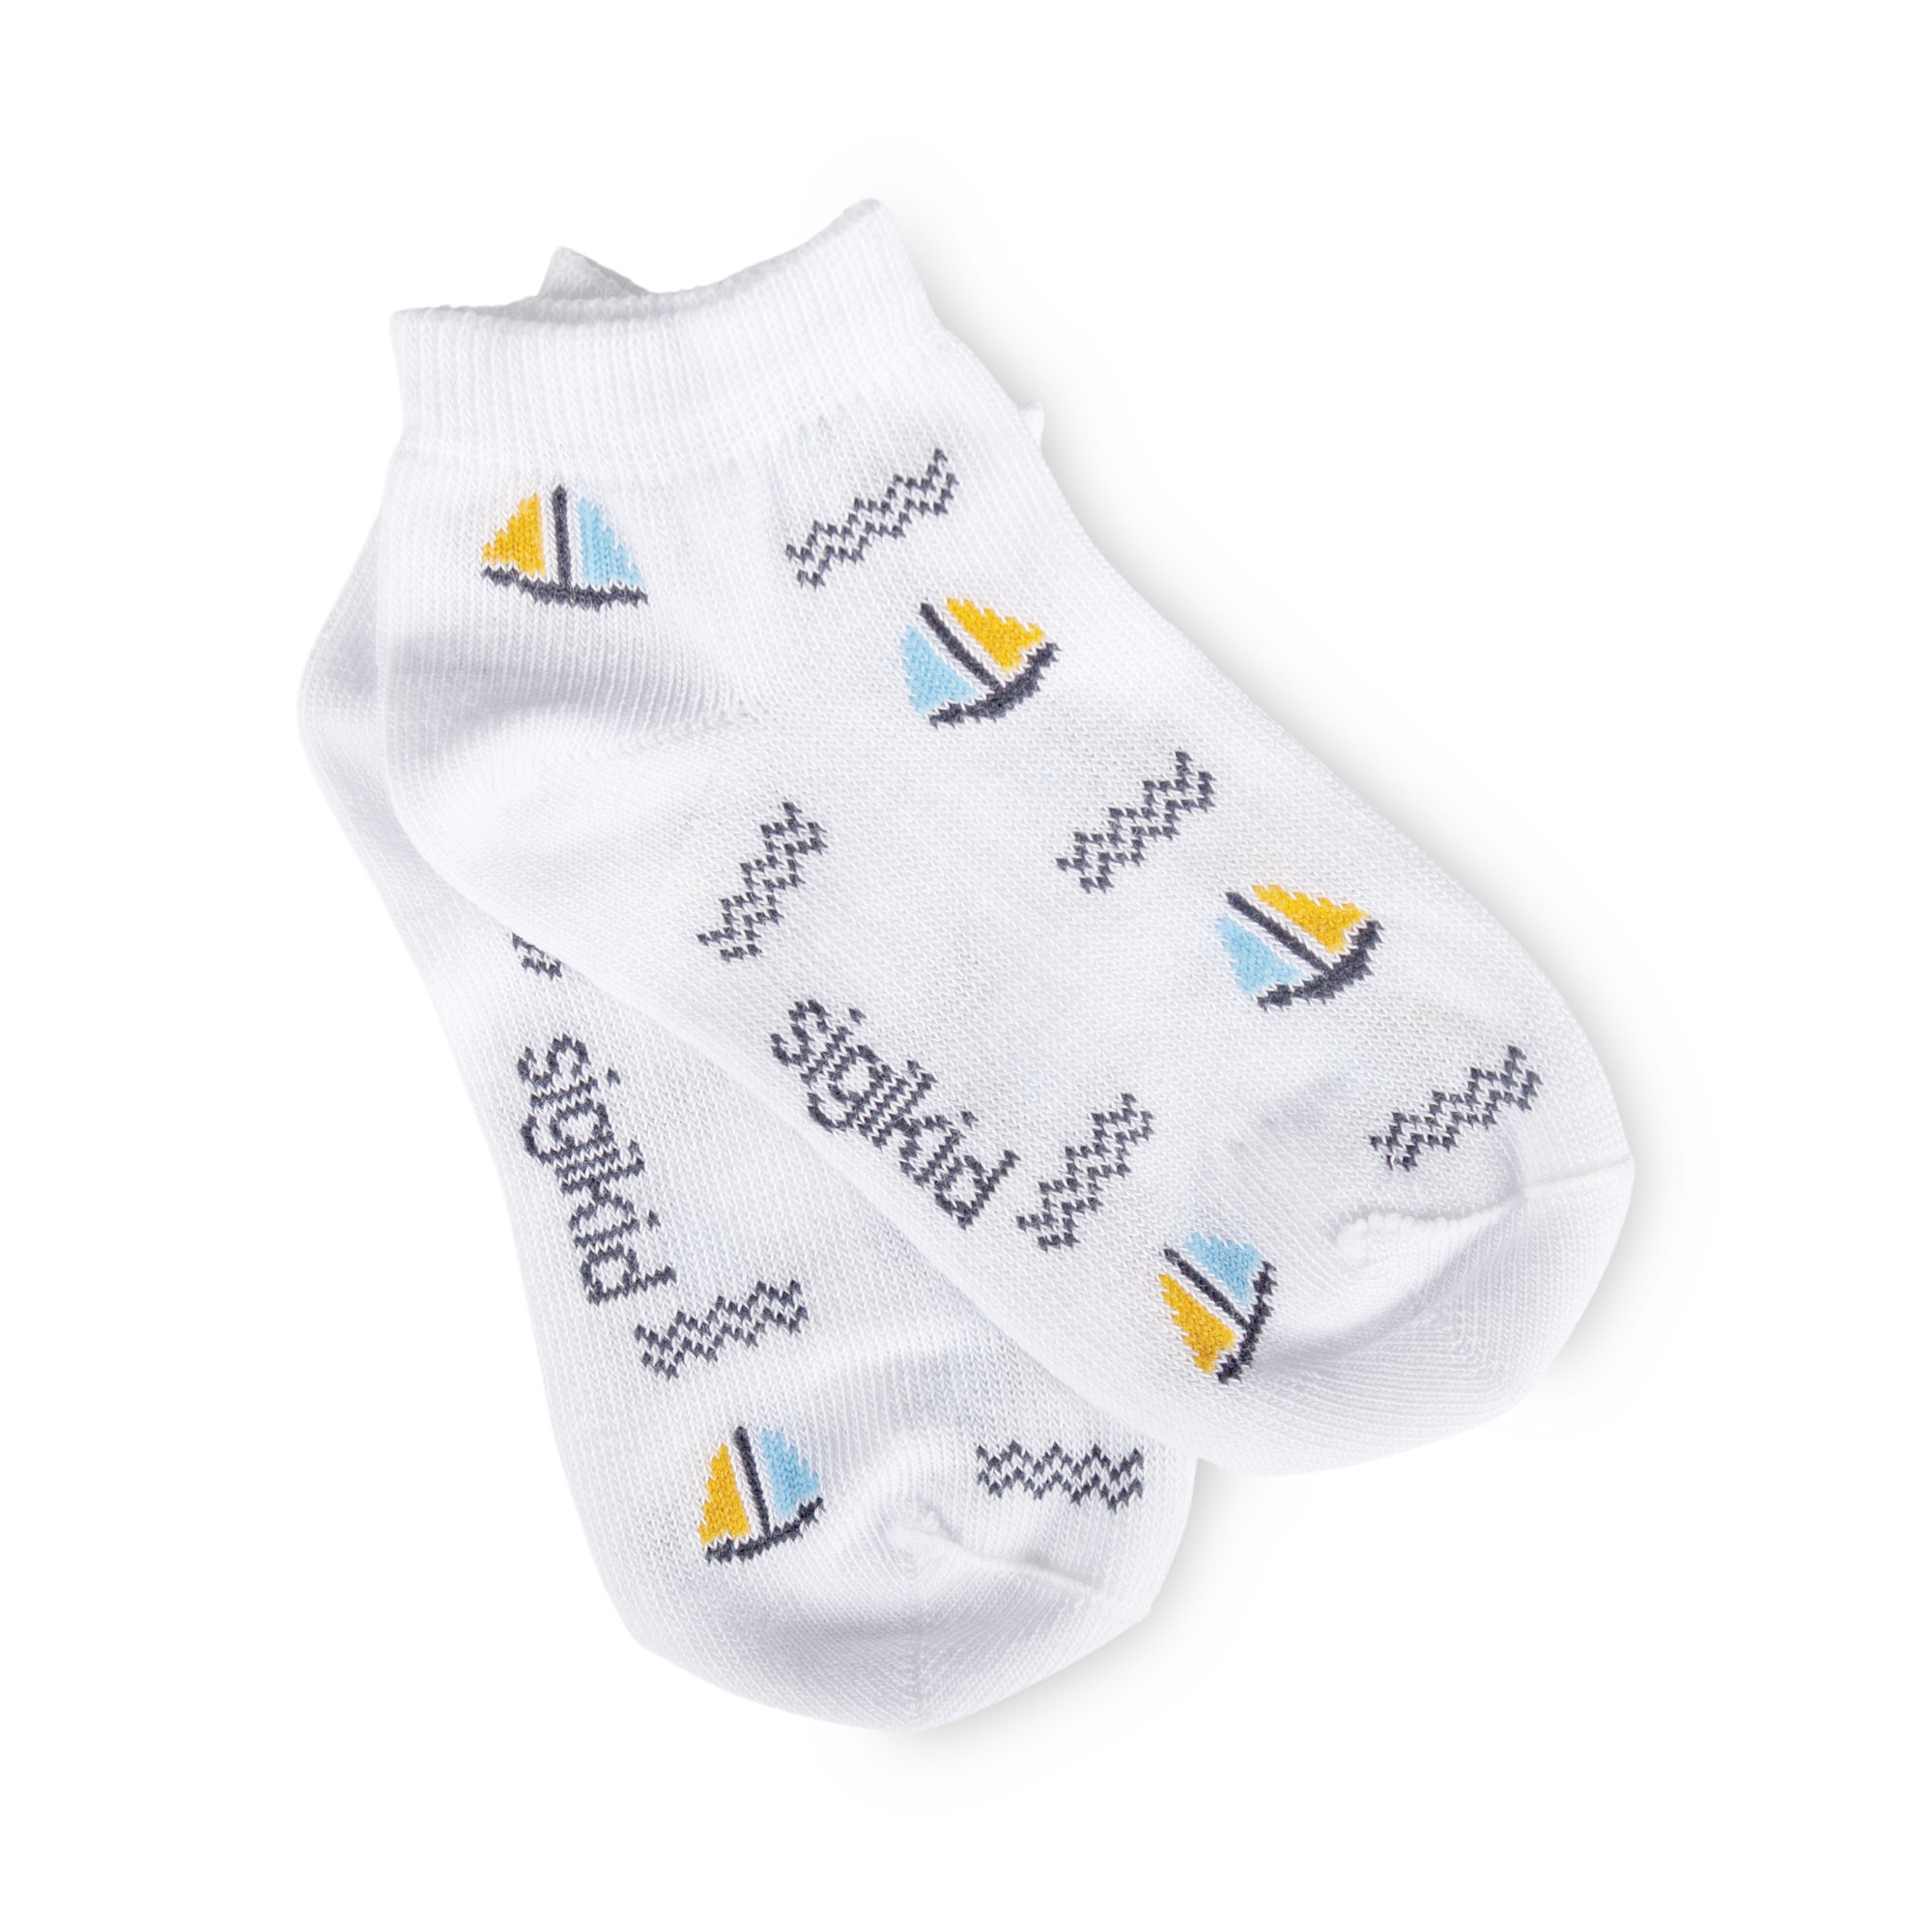 Baby trainer socks sailing boats